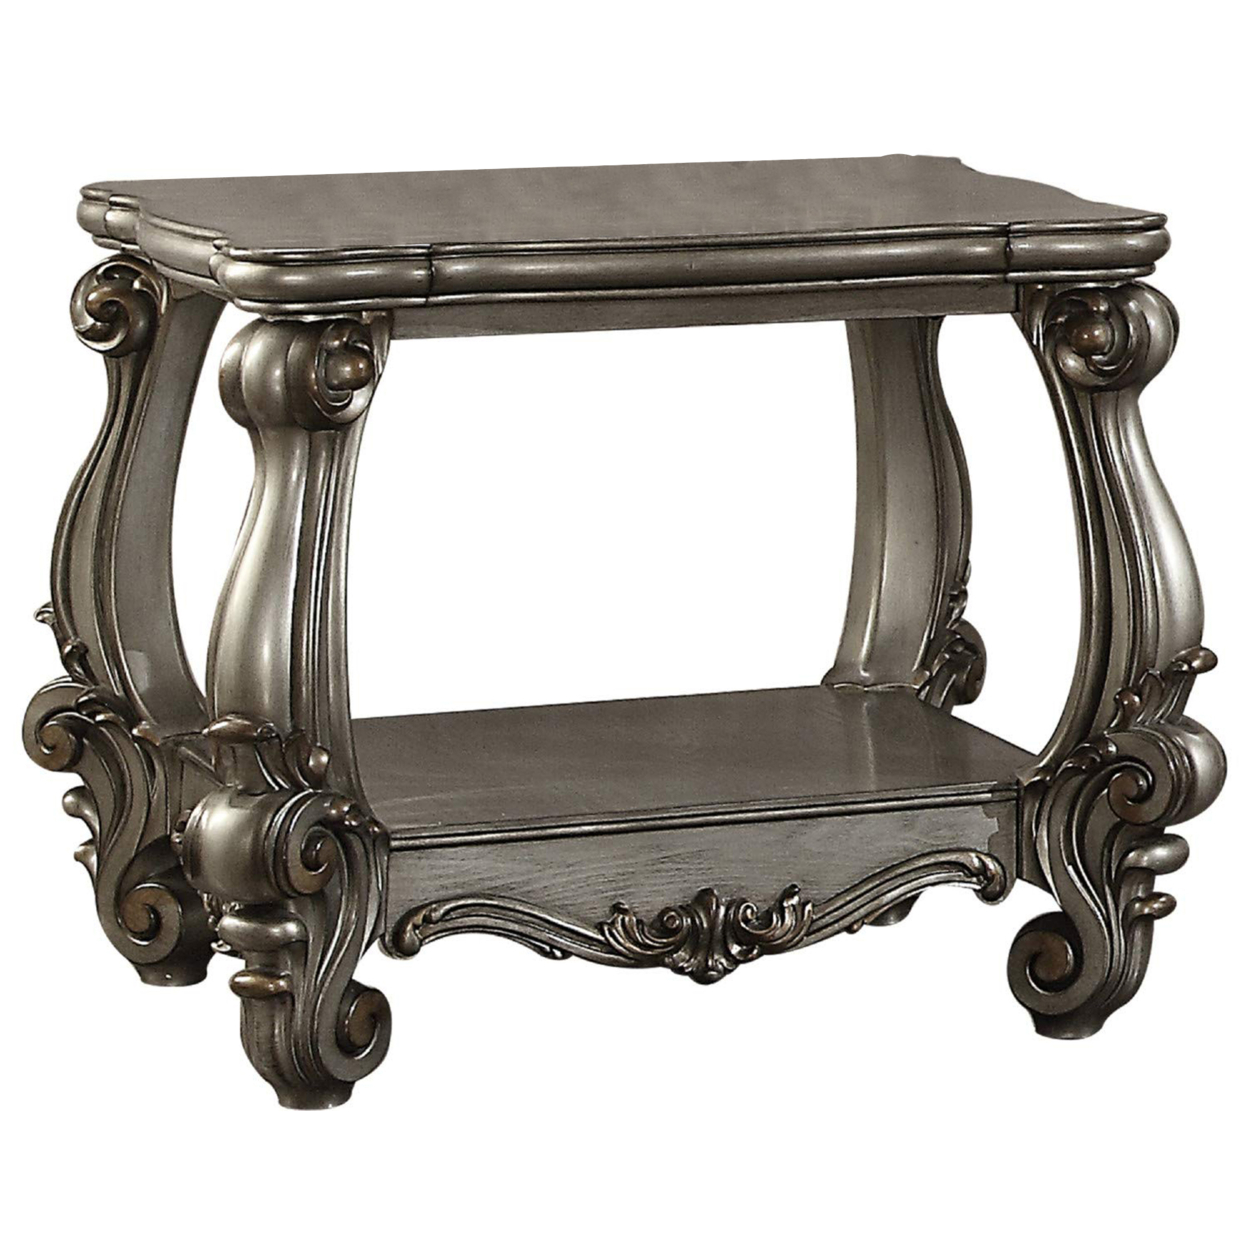 Square Shape Wooden End Table With Bottom Shelf, Antique Gray- Saltoro Sherpi